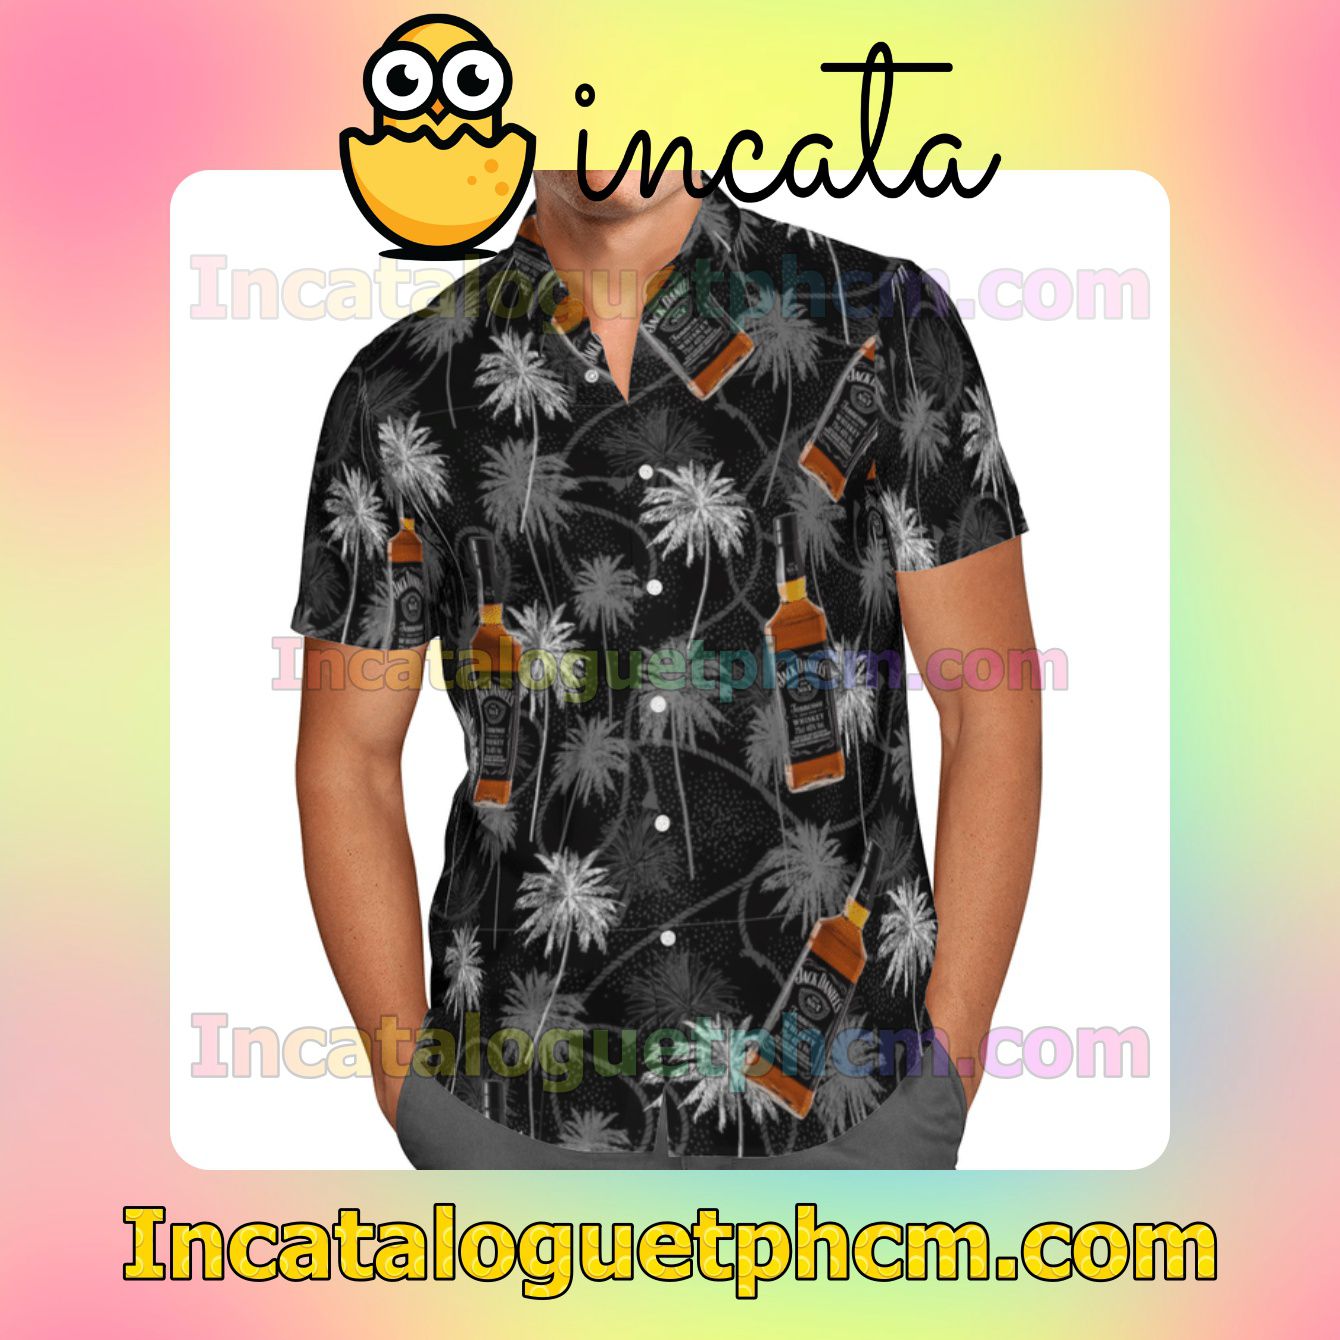 Jim Beam Bourbon Colorful Flowery Button Shirt And Swim Trunk